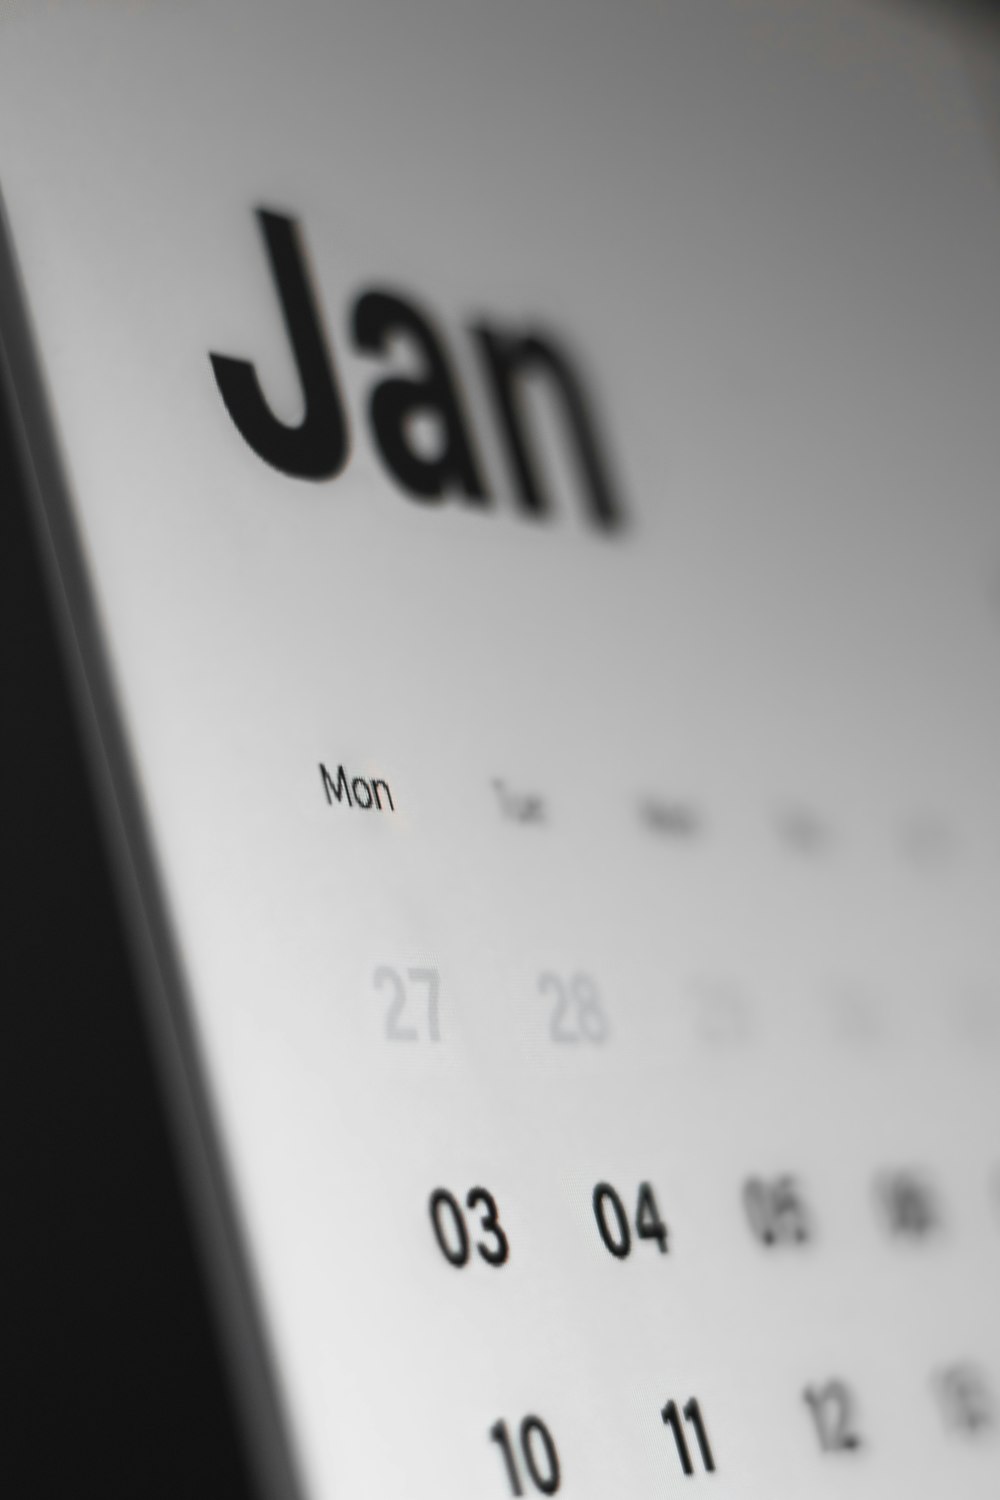 a black and white photo of a calendar